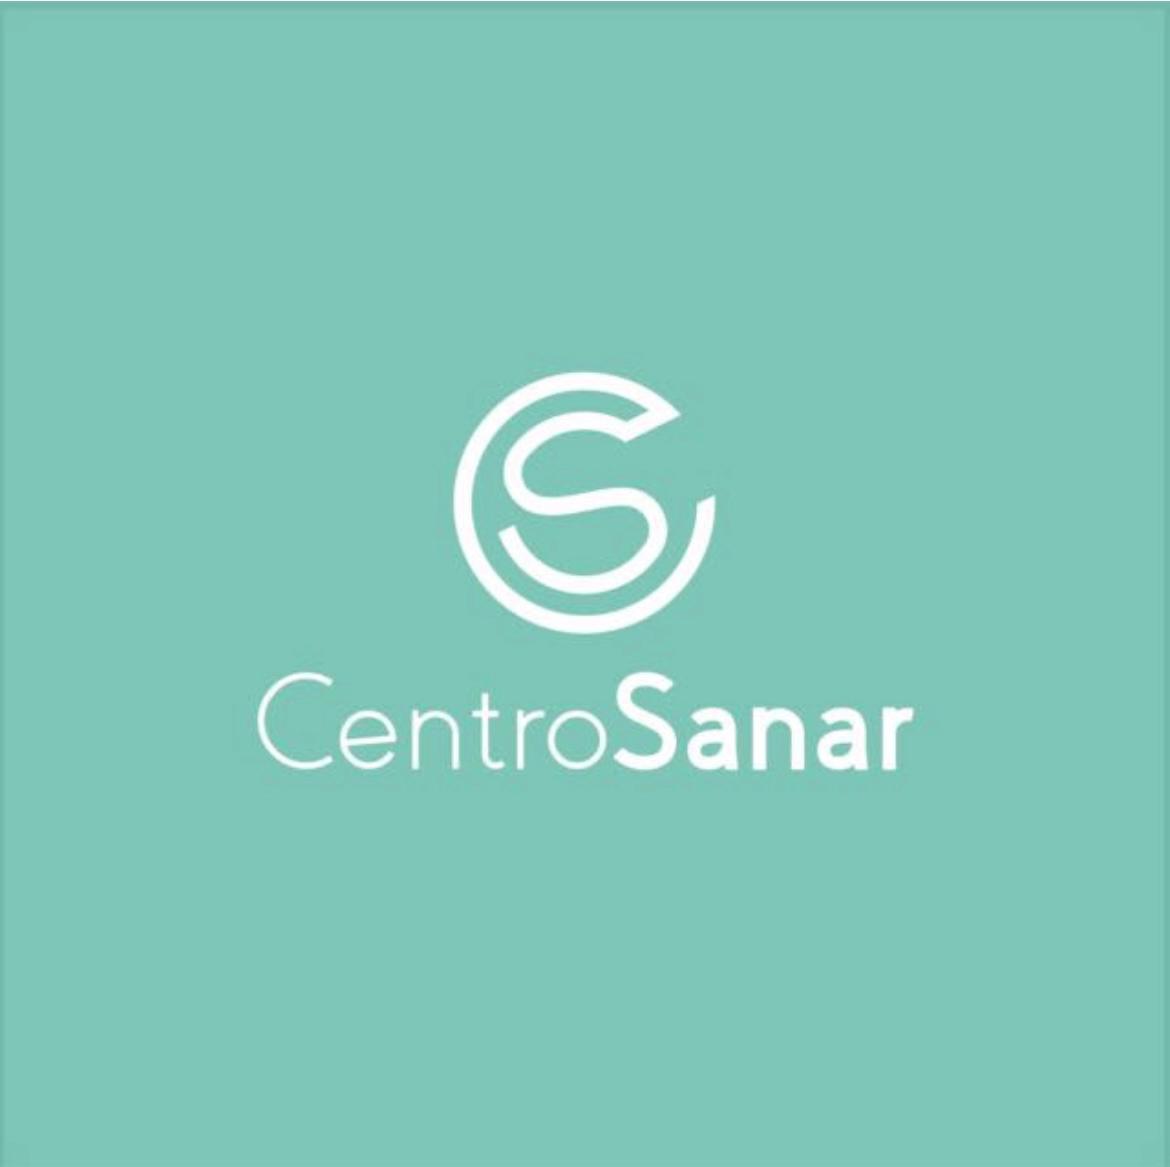 Images Centro Sanar